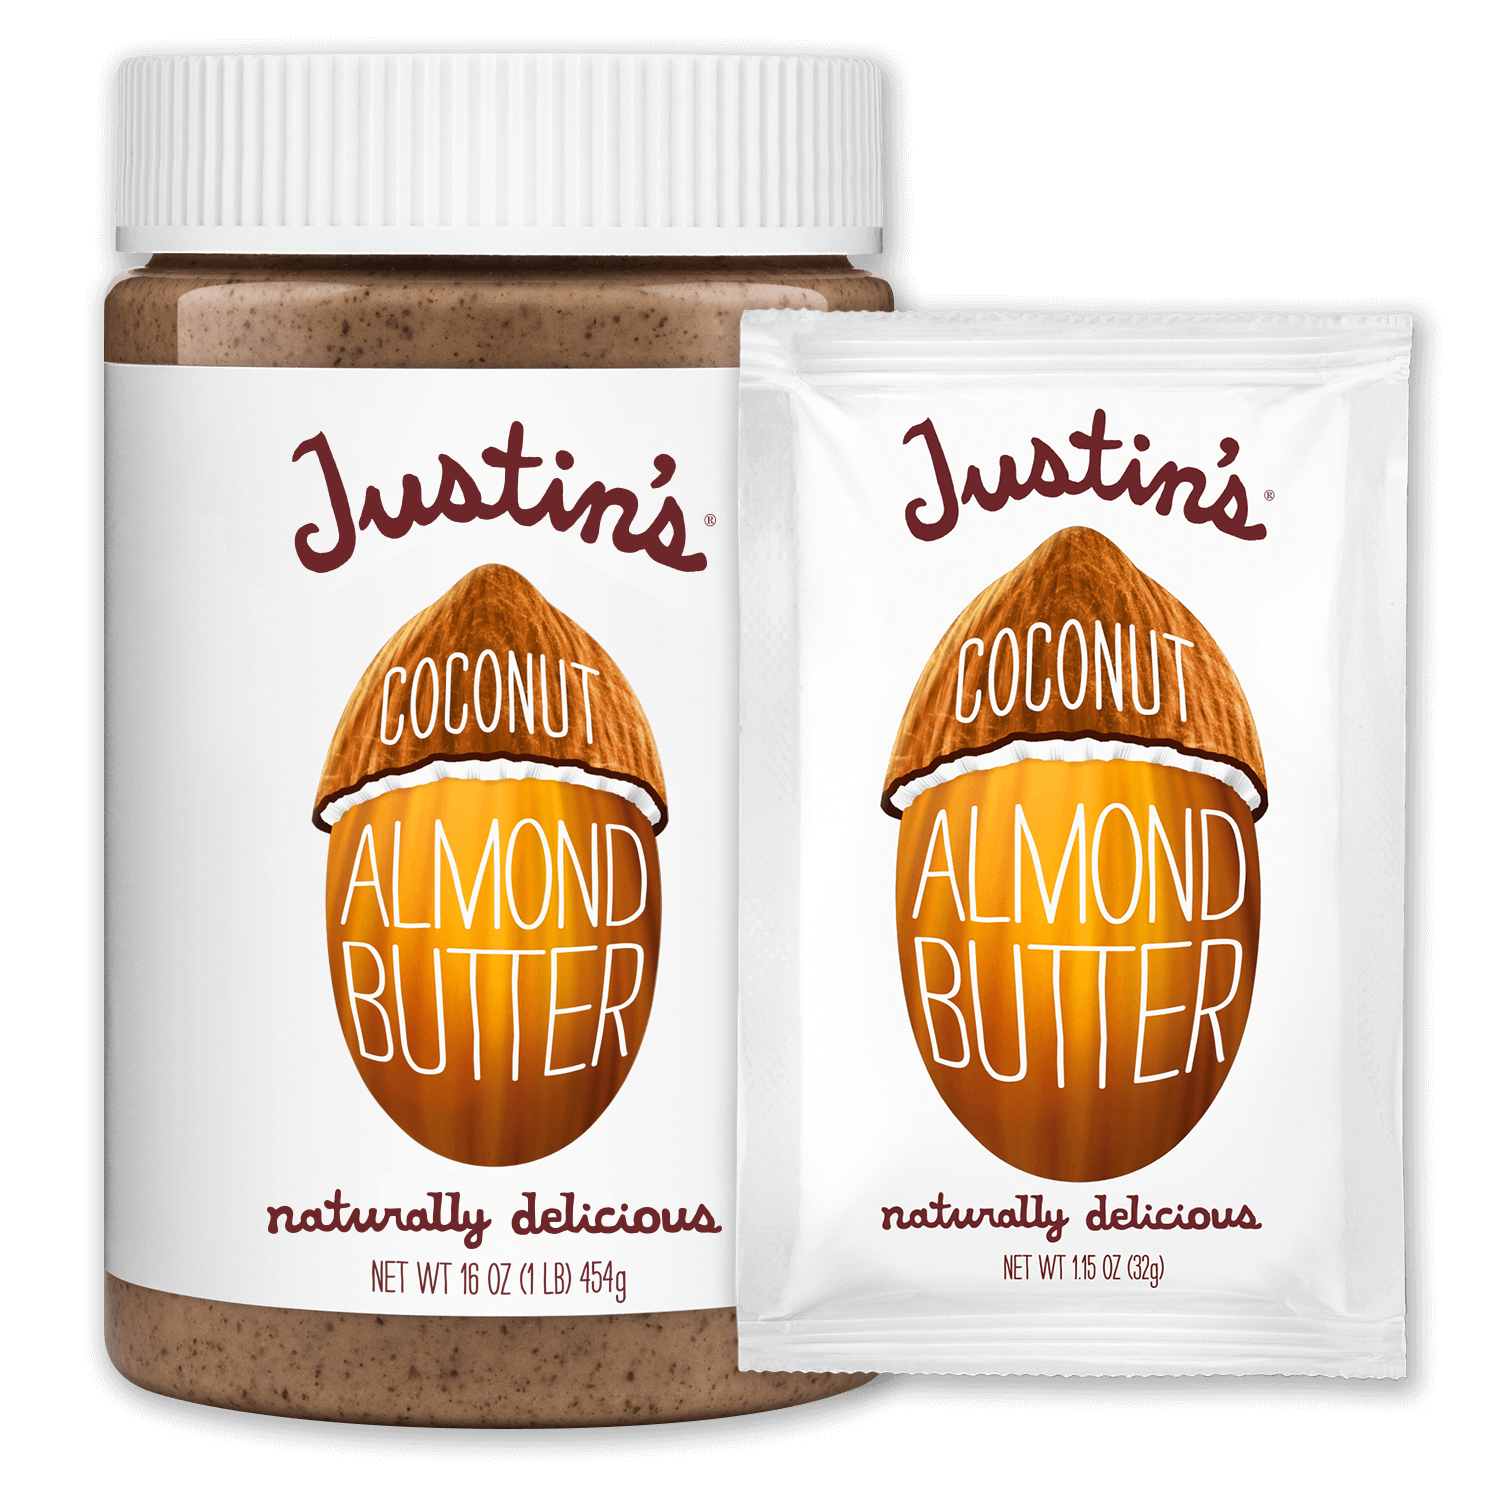 Justin's Coconut Almond Butter Spread jar 16 oz. beside Justin's Coconut Almond Butter Spread Squeeze Pack 1.15 oz.